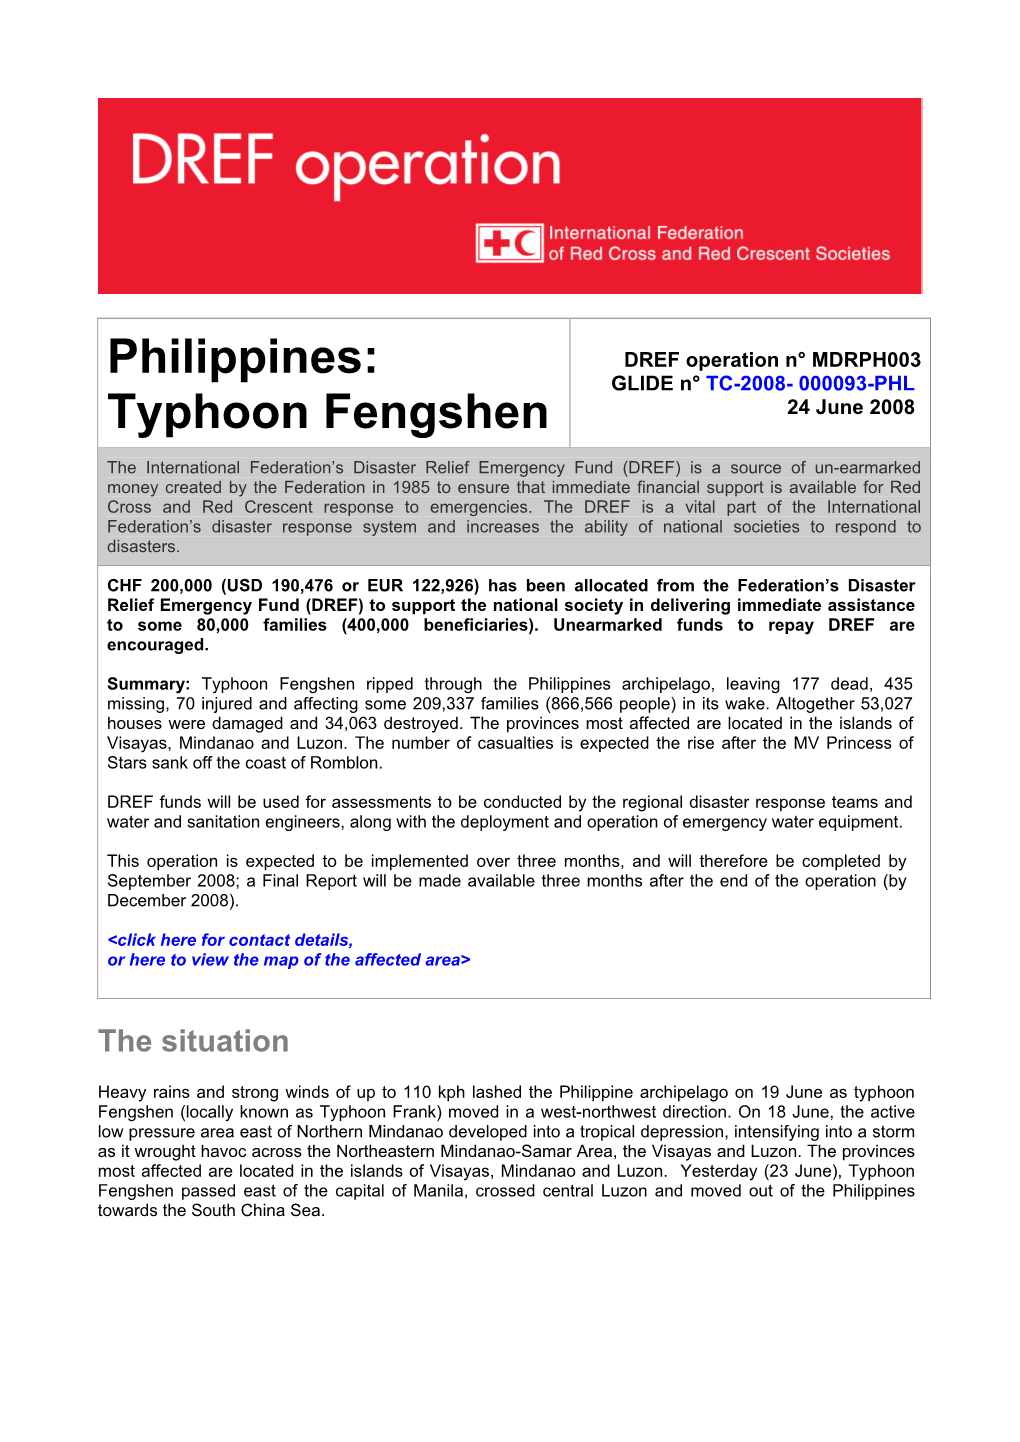 Typhoon Fengshen